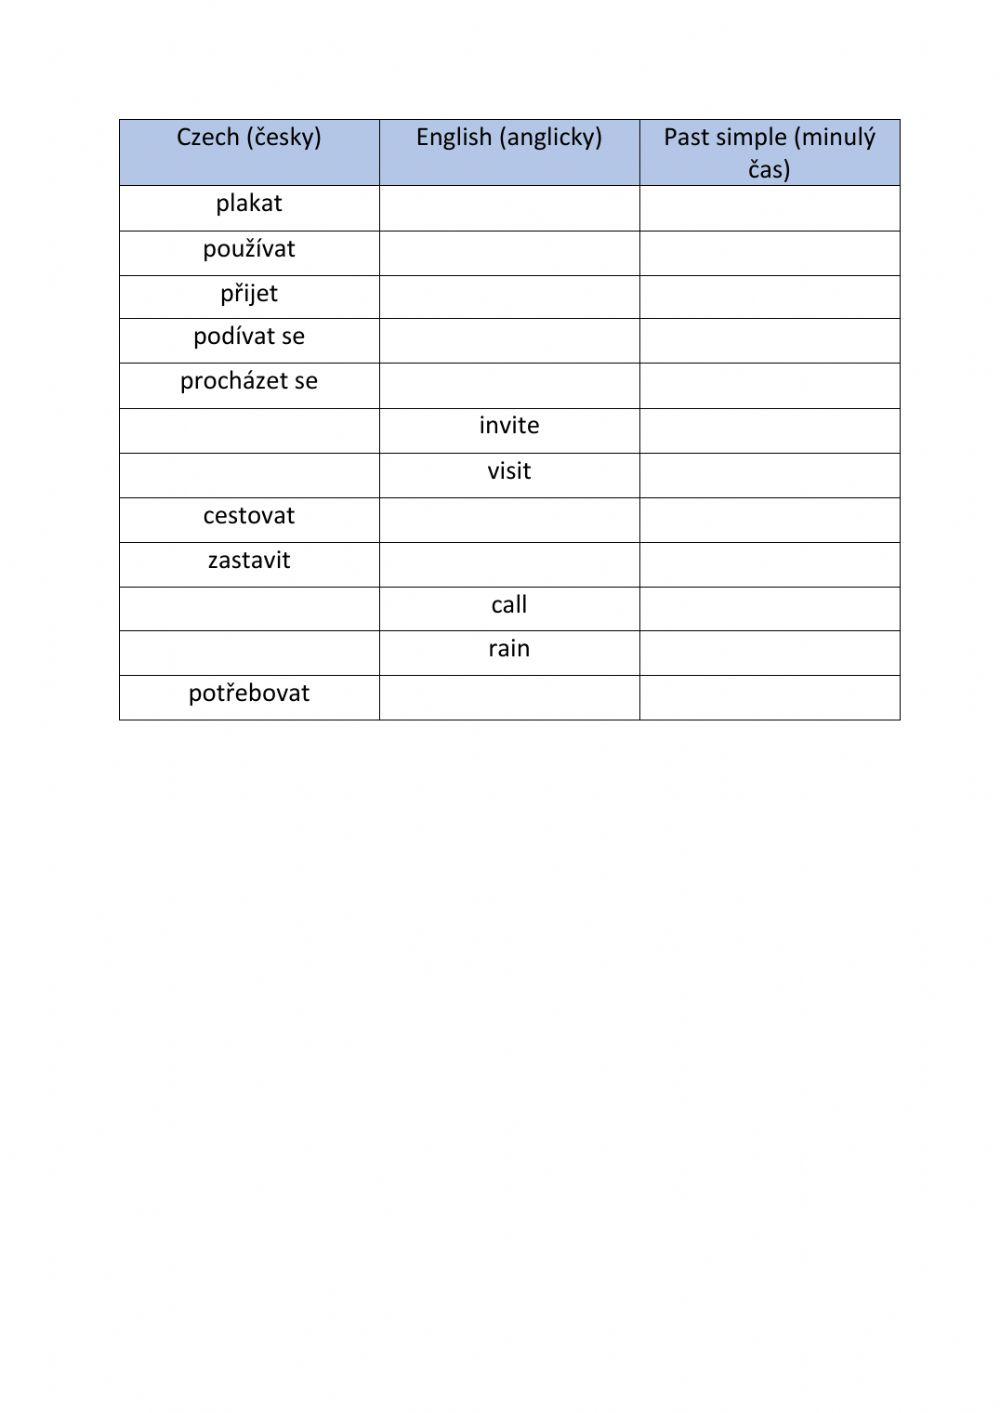 Past simple - regular verbs